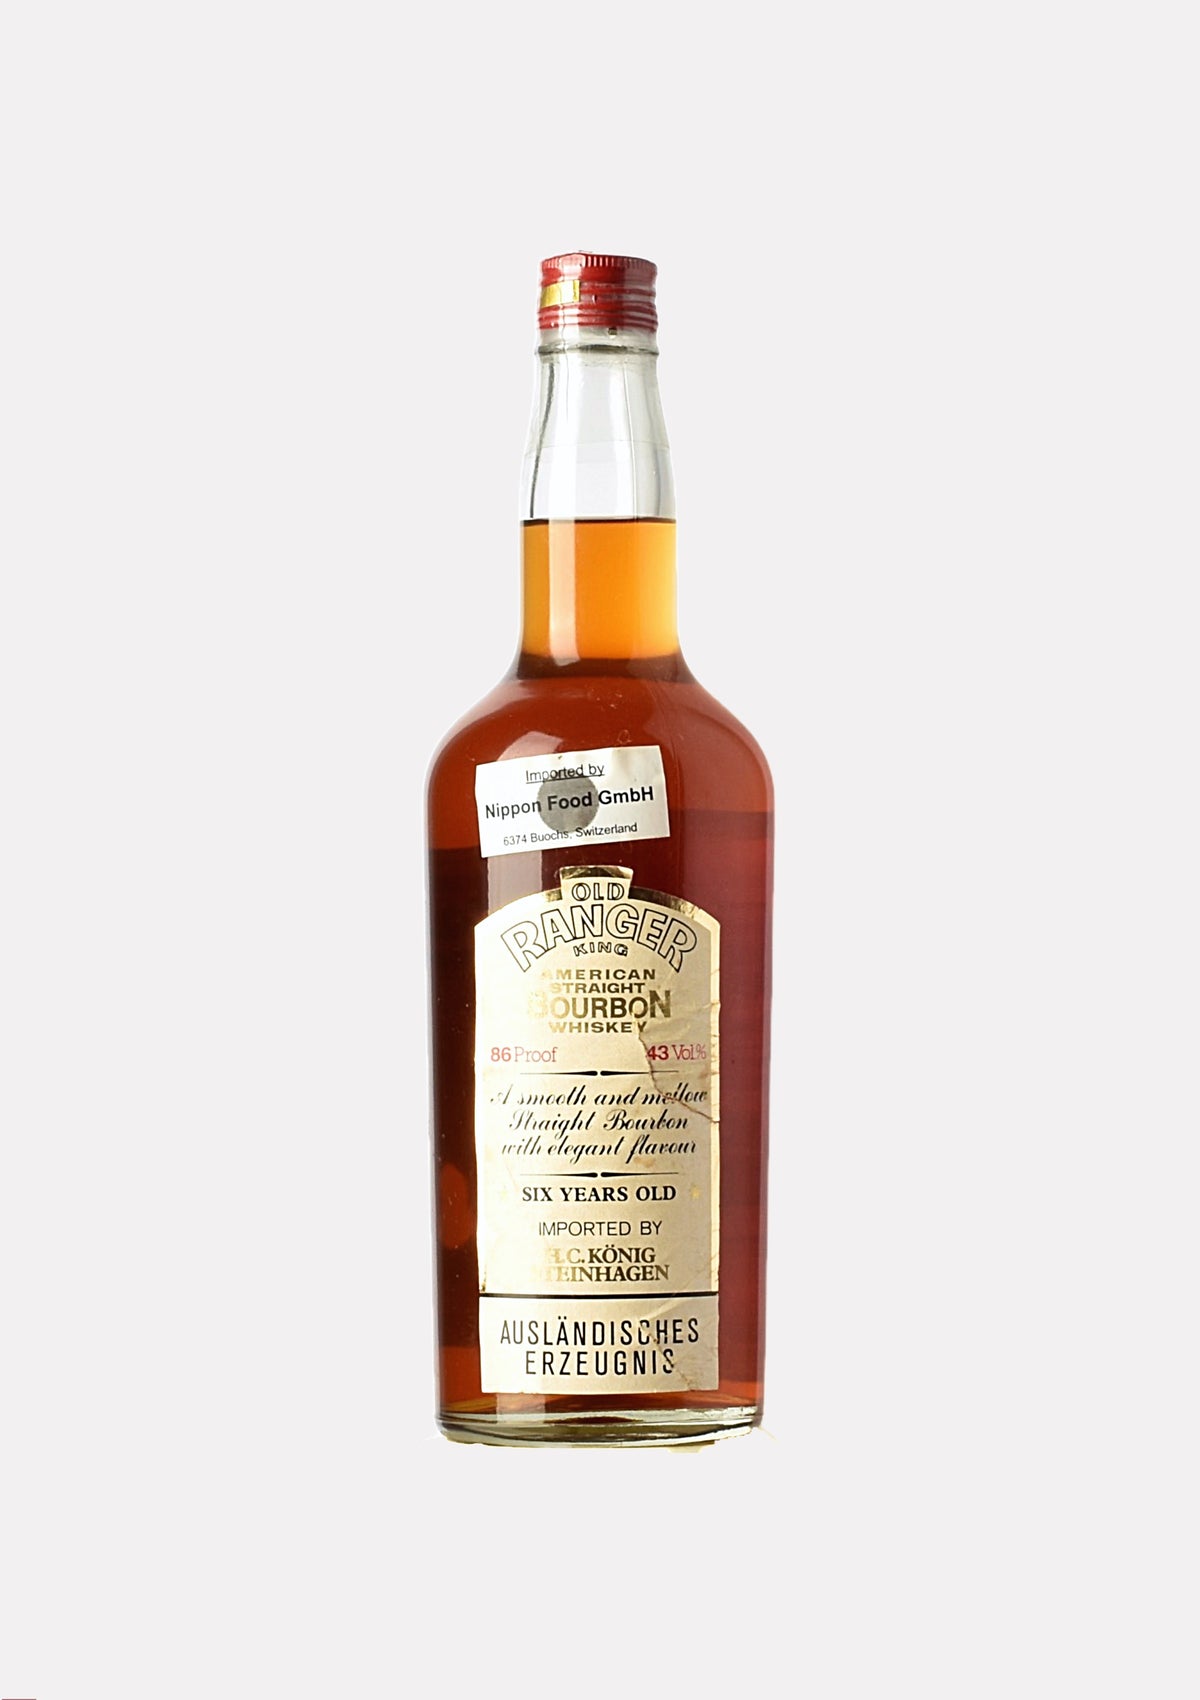 Old Ranger King American Straight Bourbon Whiskey 6 Jahre